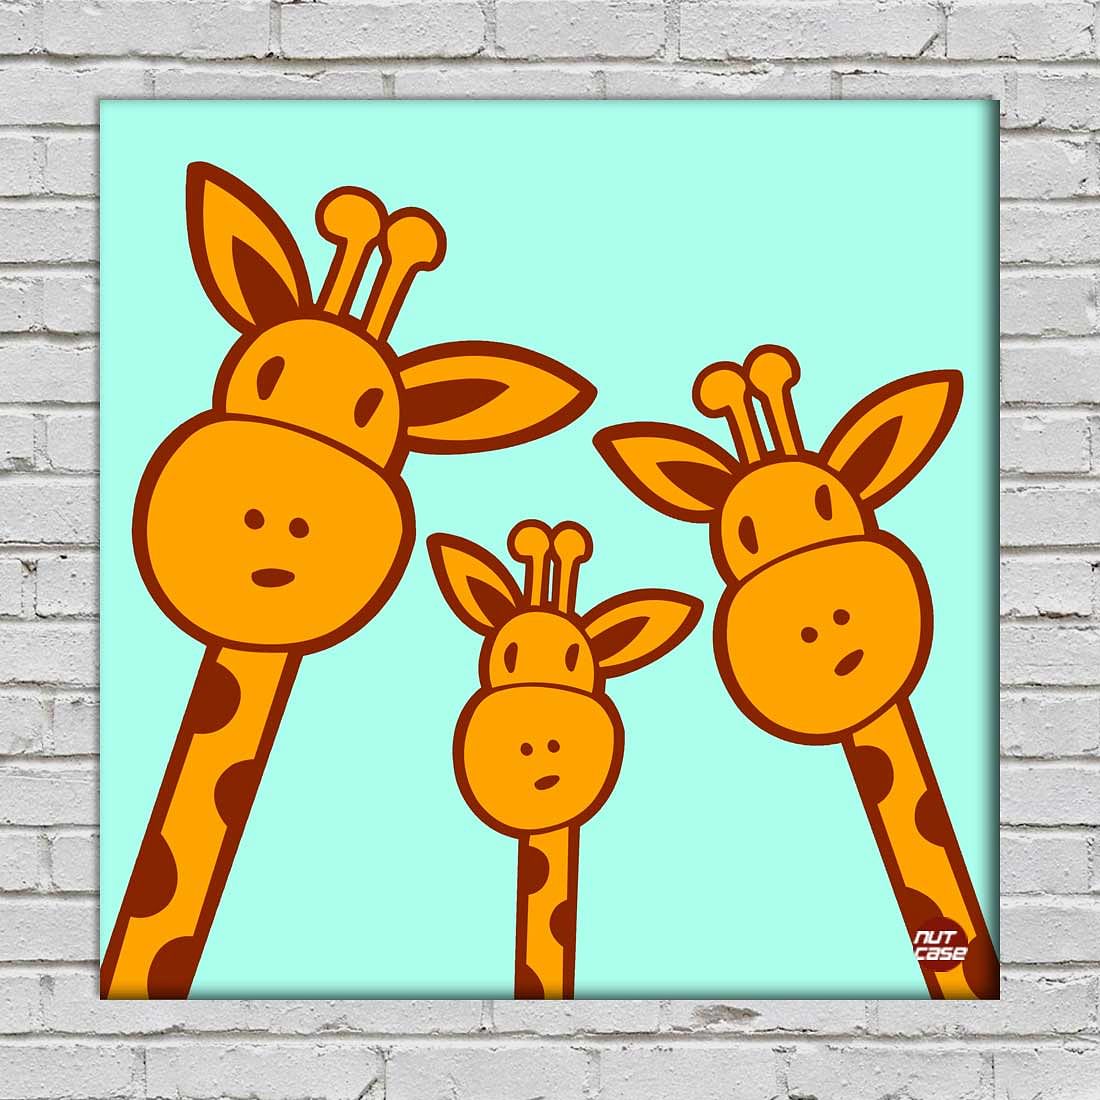 Wall Art Decor Panel For Home - Cute Giraffes Nutcase